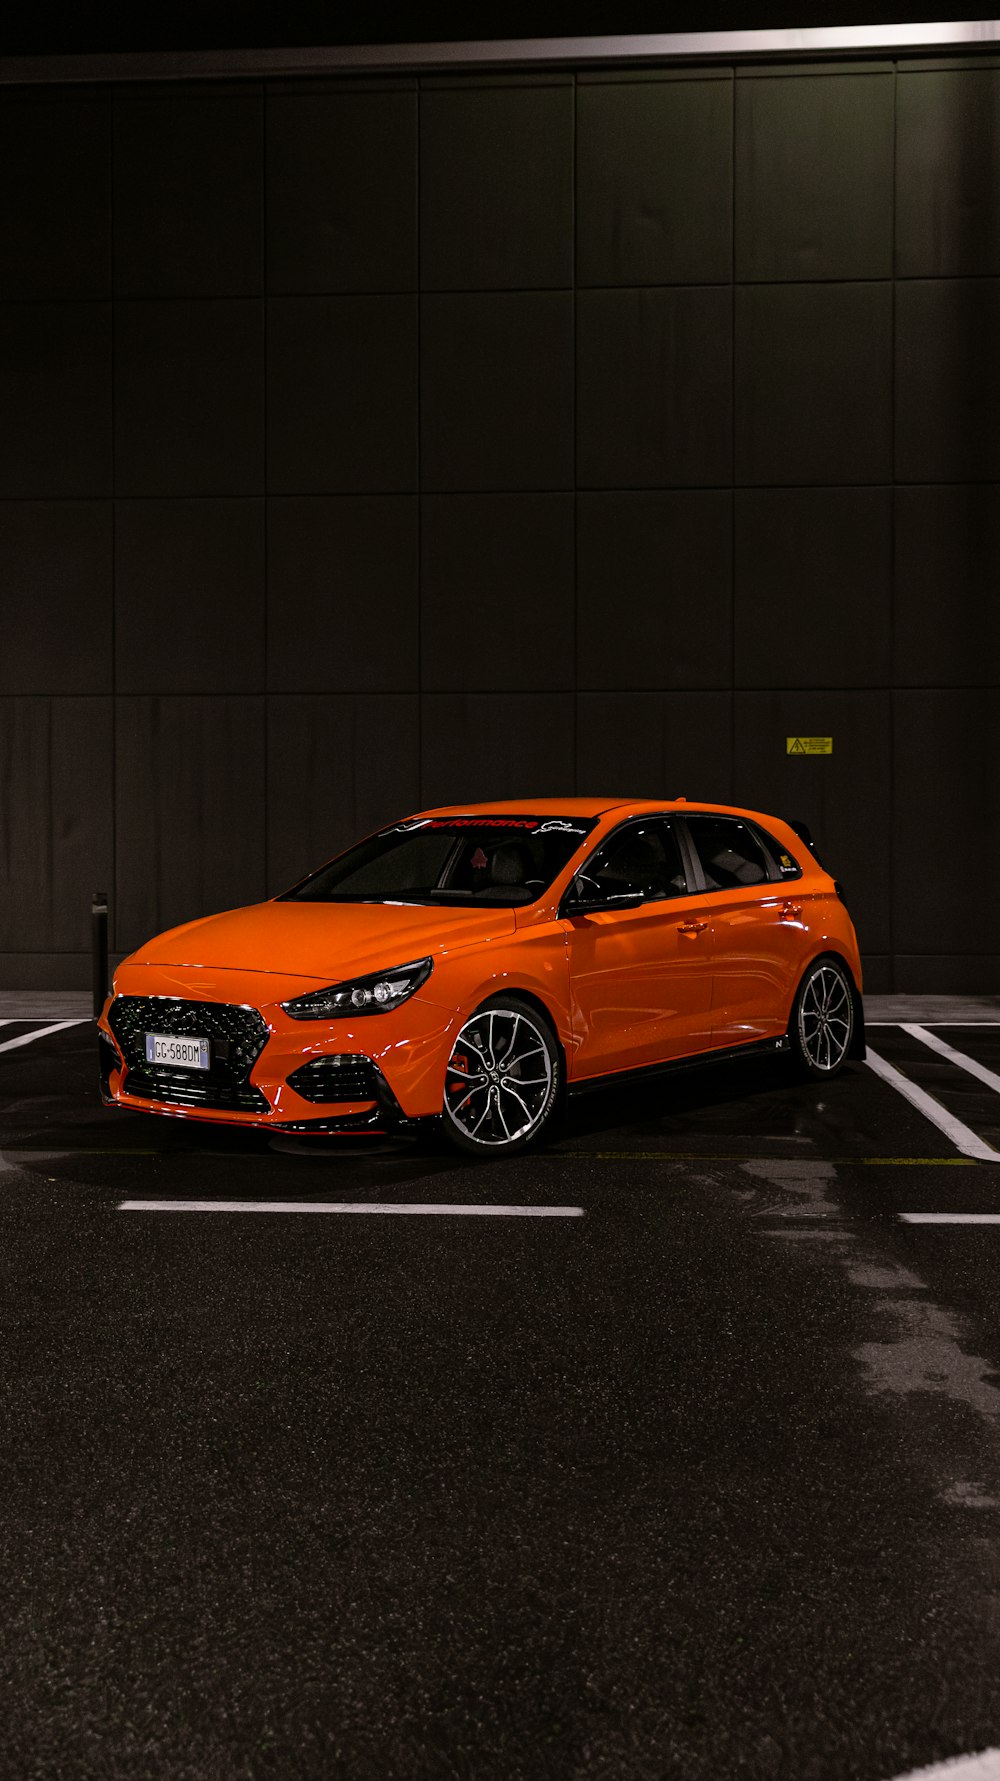 an orange car parked in a parking lot